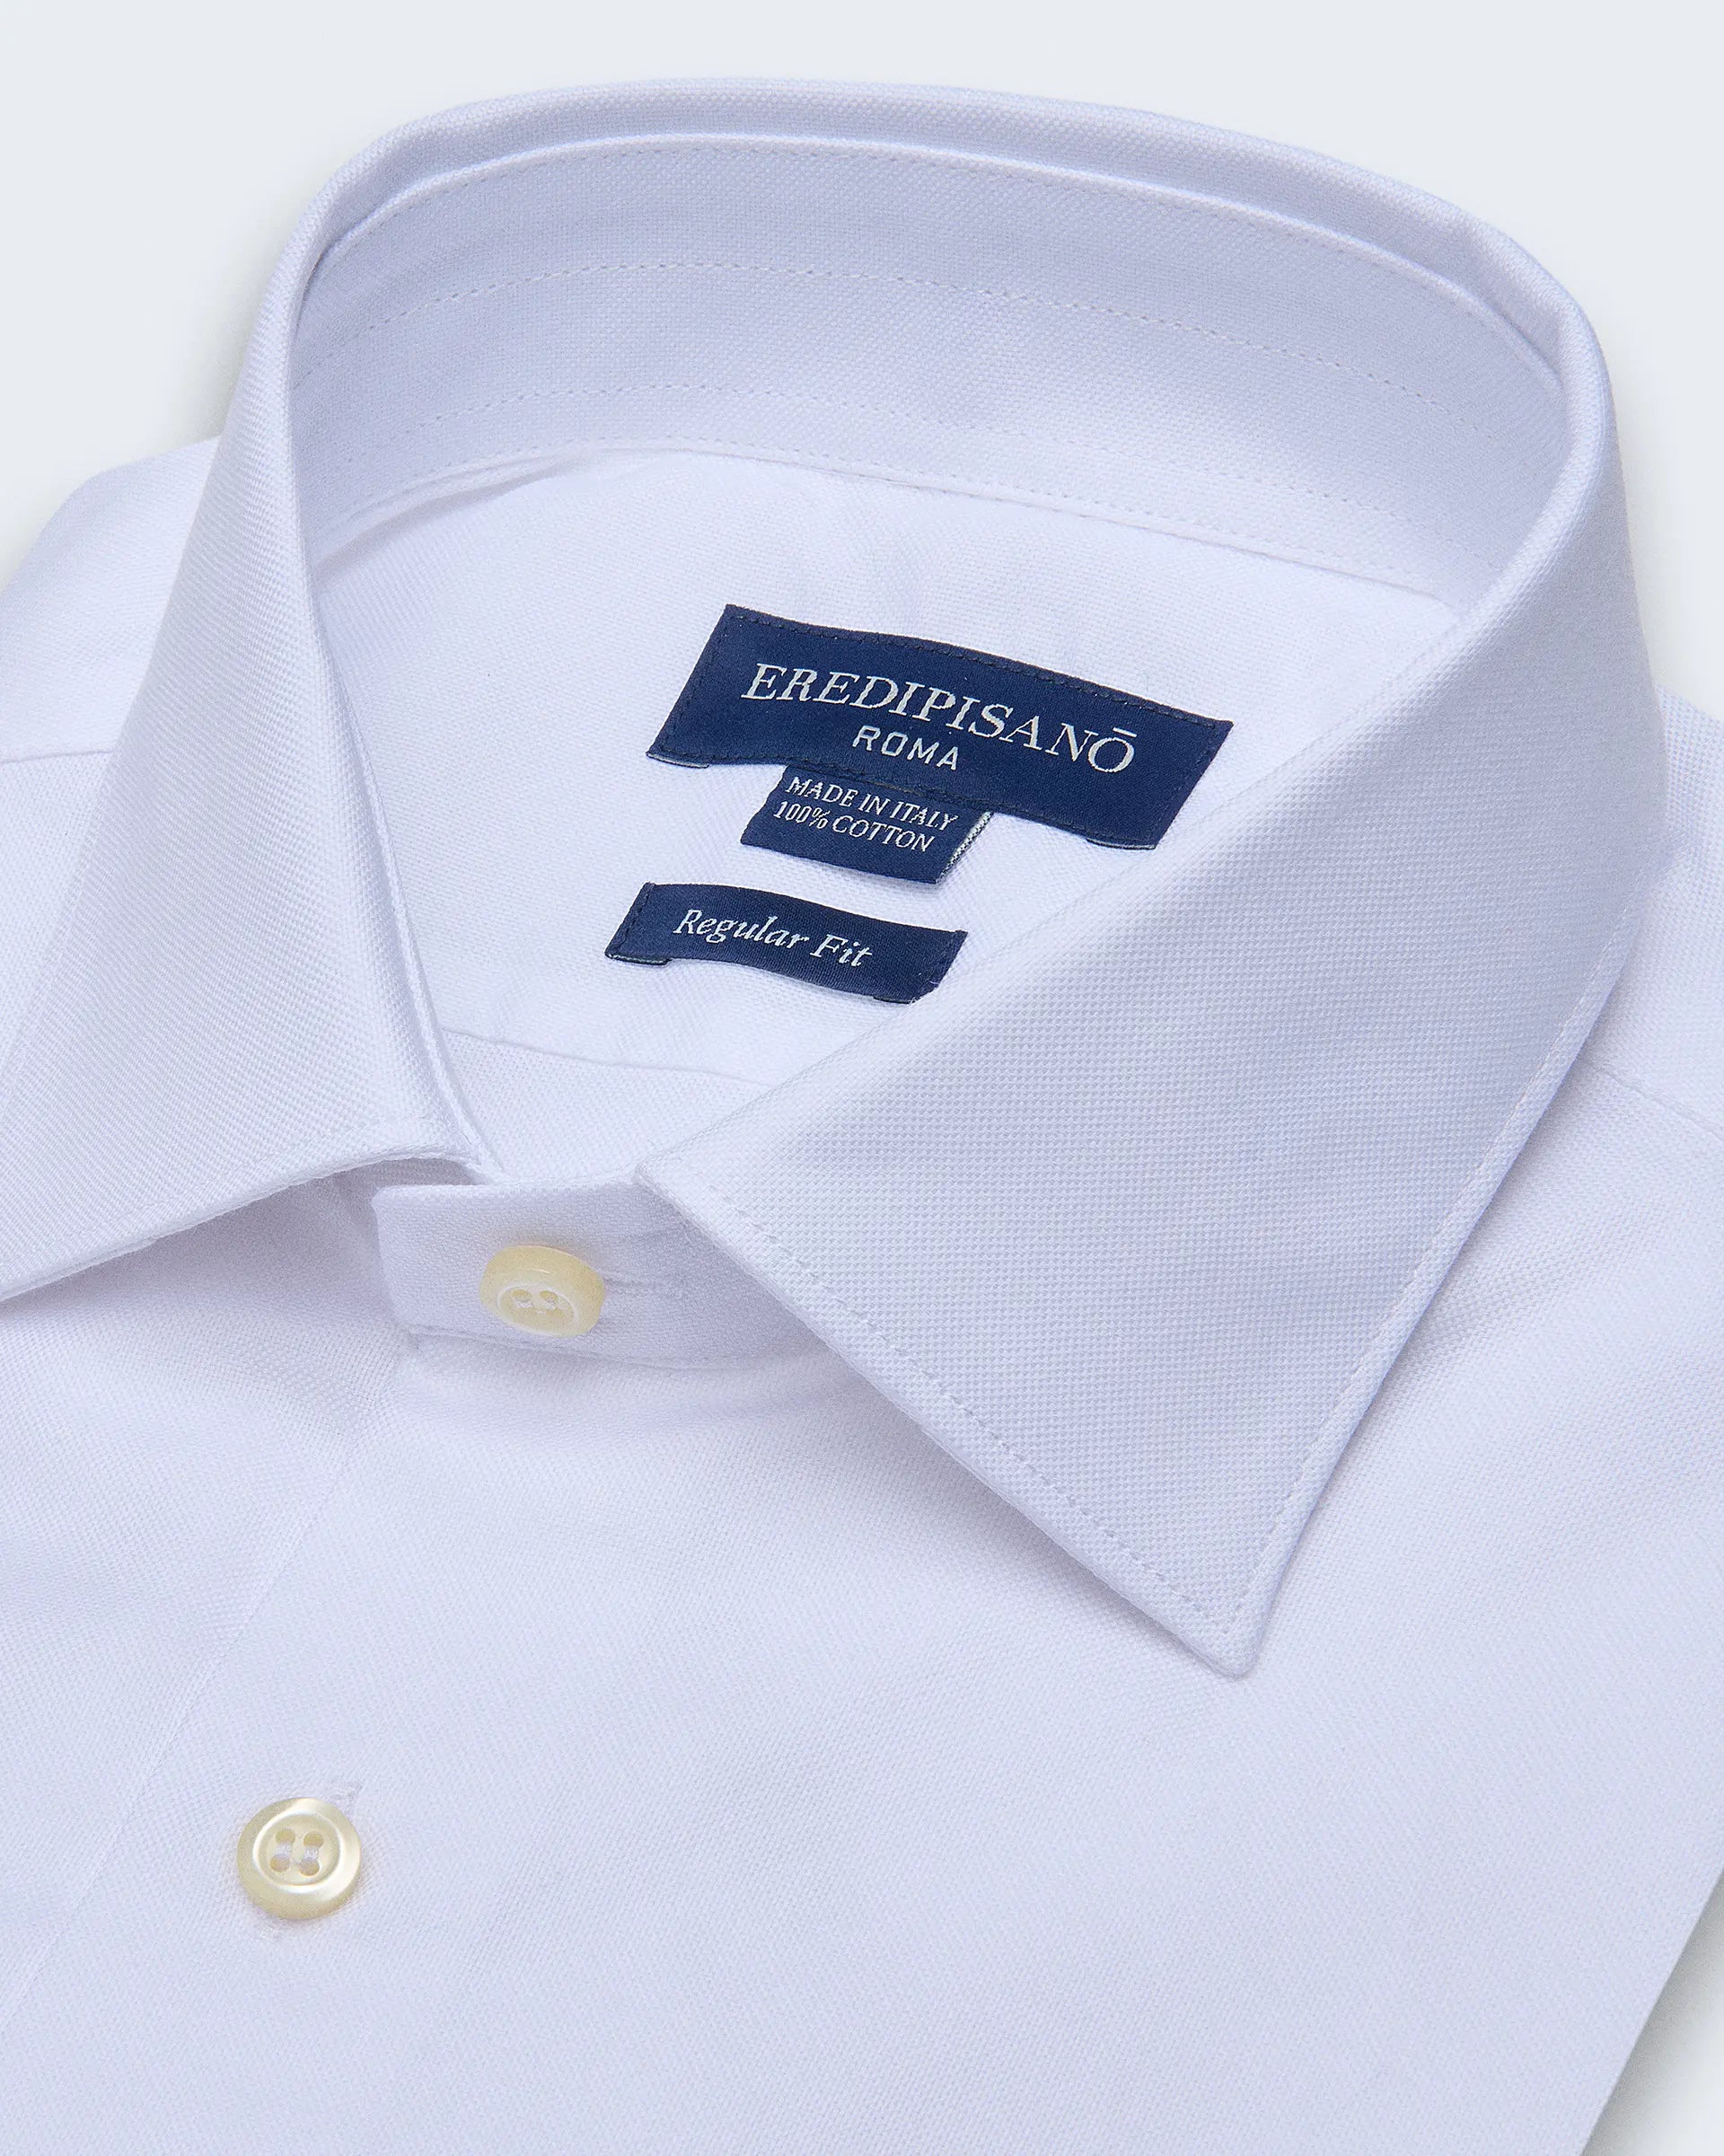 Light Blue Shirt Oxford Regular Fit with Cutaway Collar